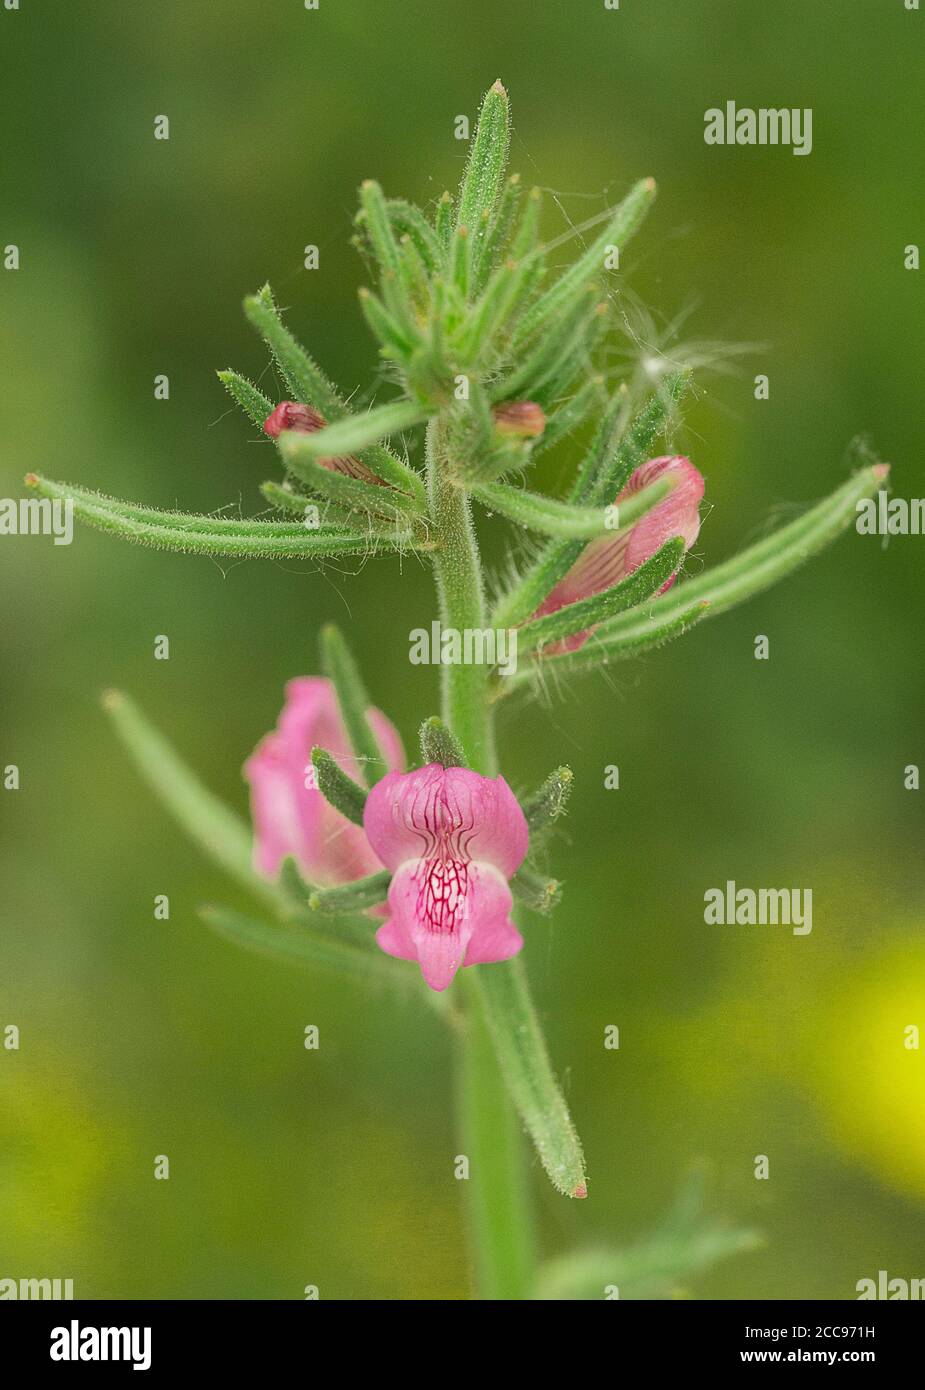 Weasel's Snout flower, Misopates orontium Stock Photo